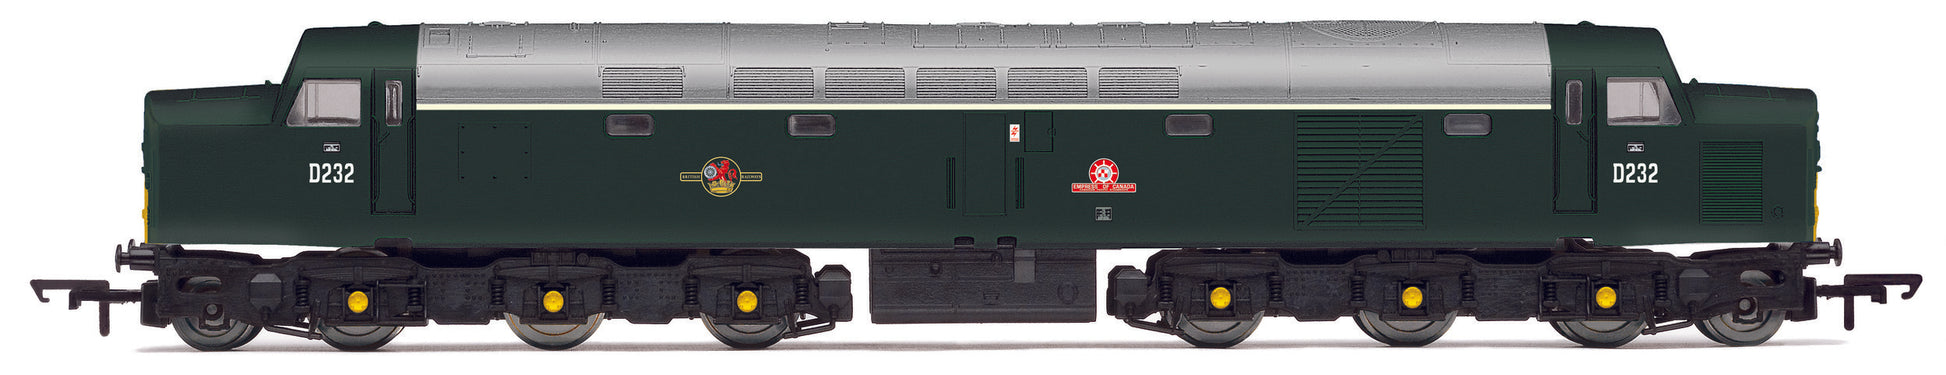 Hornby R30192 Railroad Plus BR, Class 40, 1Co-Co1, D232 'Empress of Canada' - Era 6 - Chester Model Centre